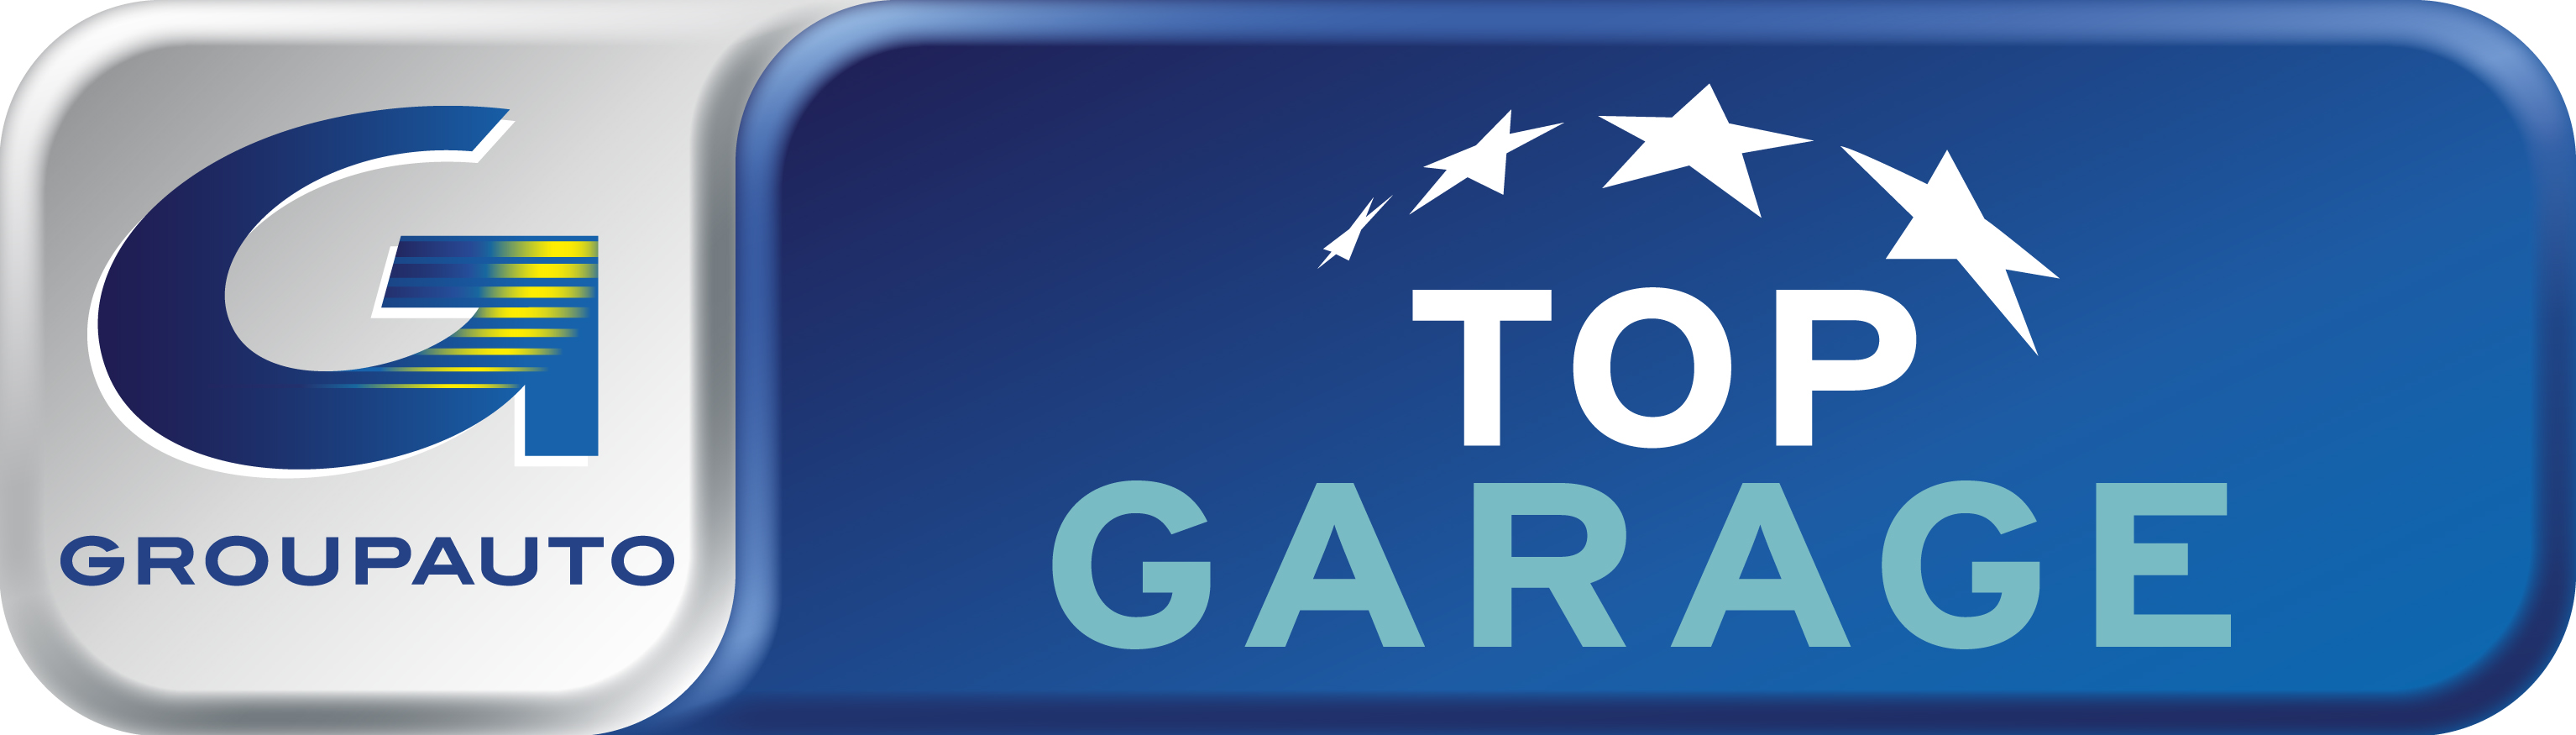 Top Garage - Garage Vincent logo